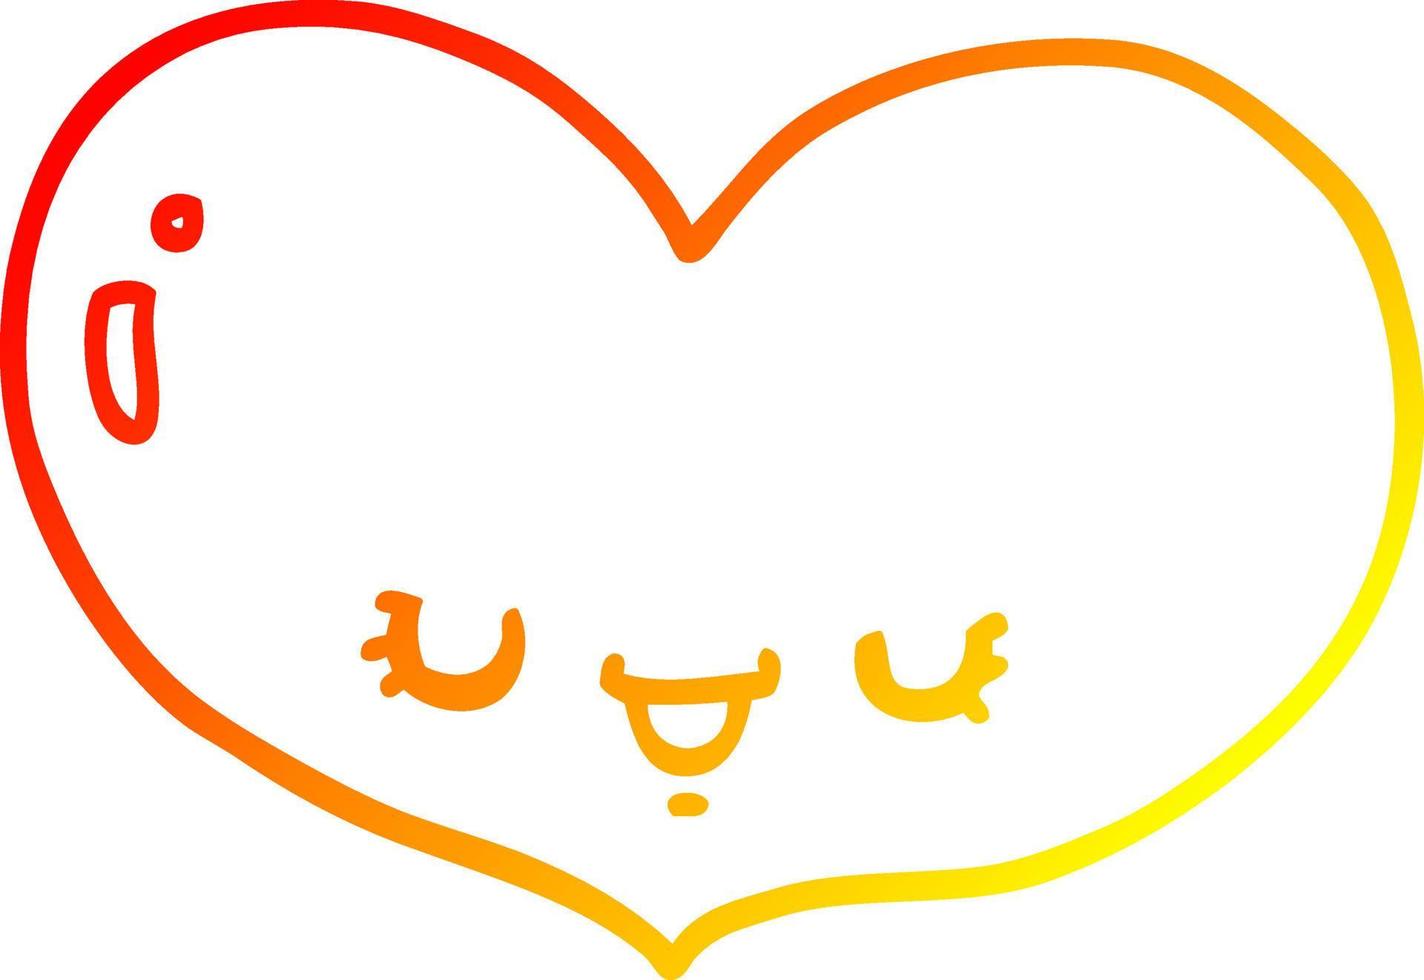 warm gradient line drawing cartoon love heart character vector